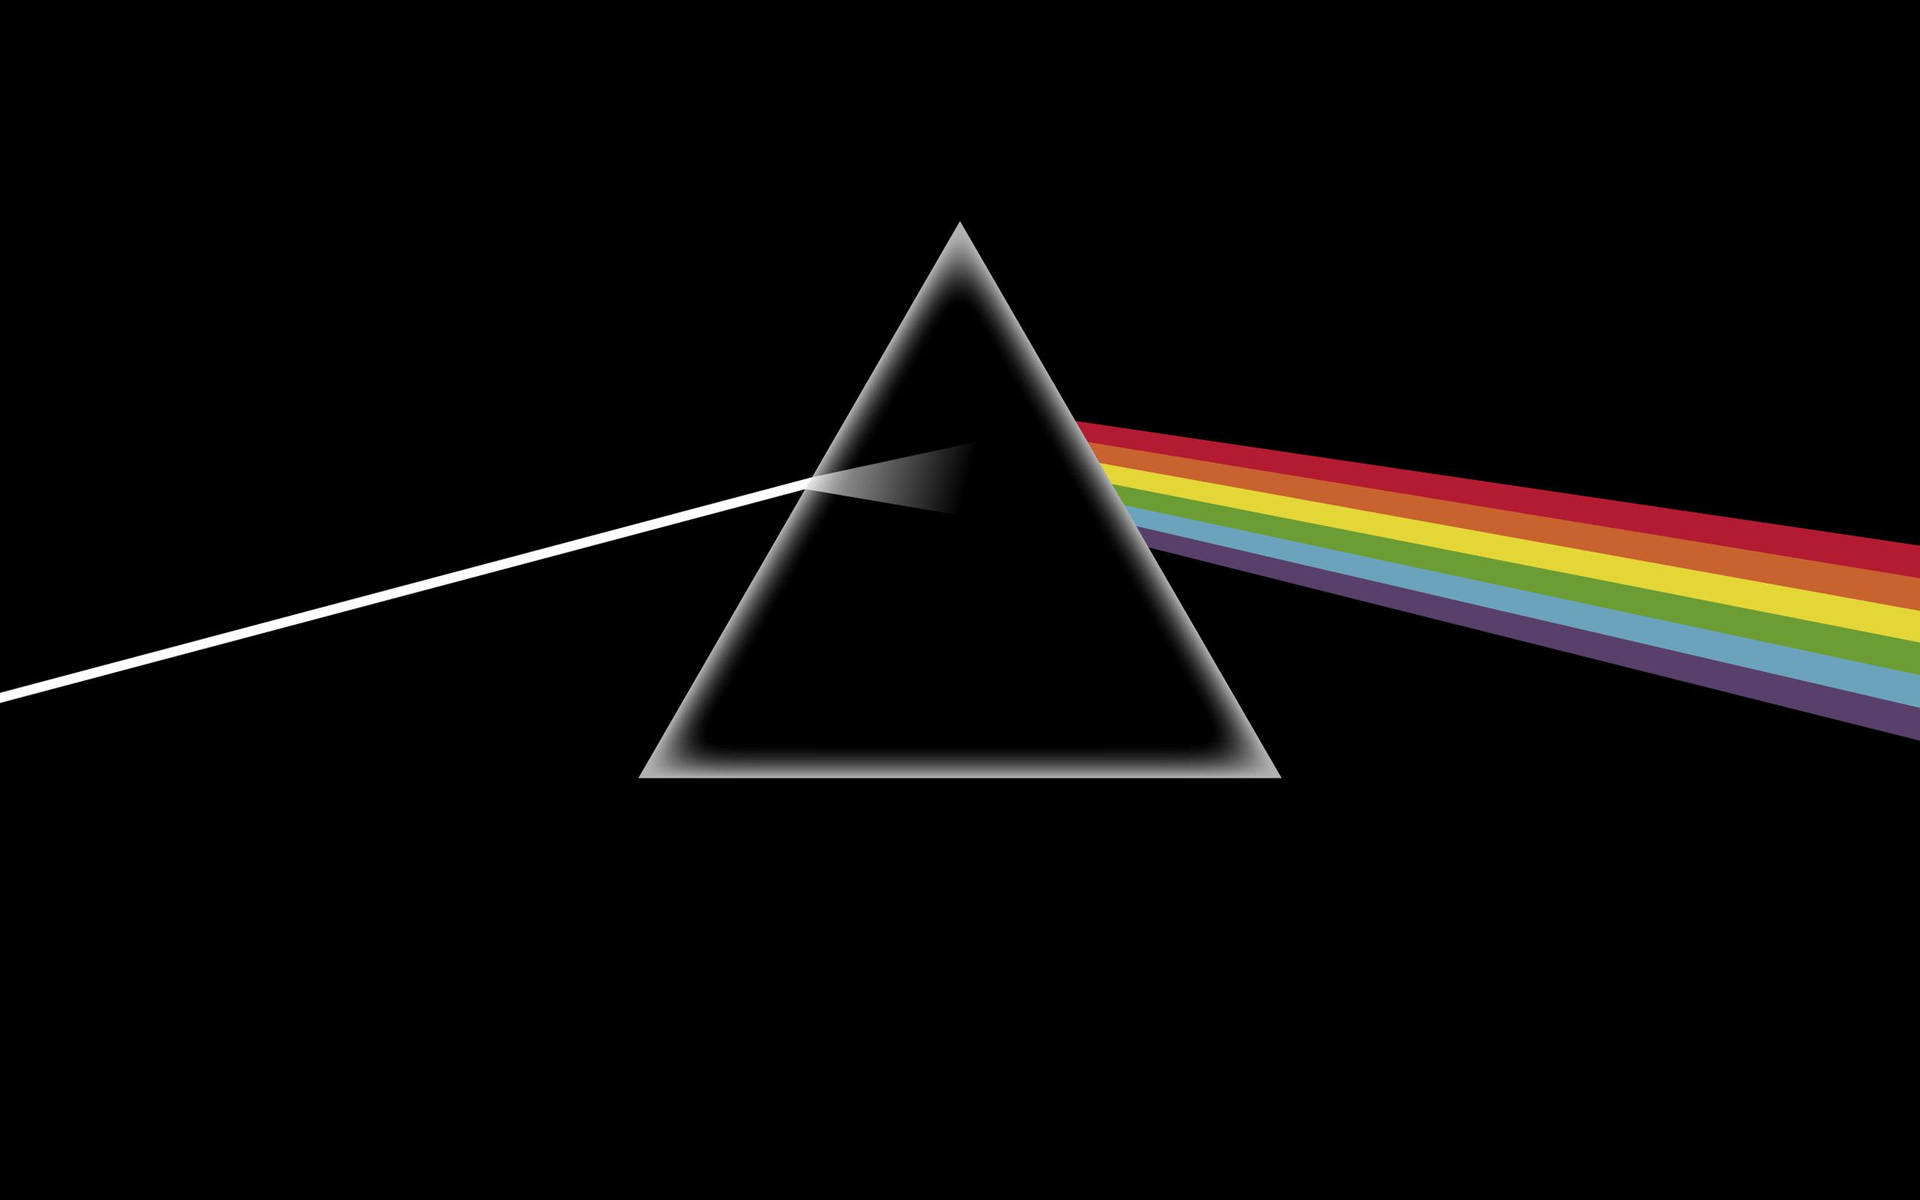 Black Pyramid With Rainbow